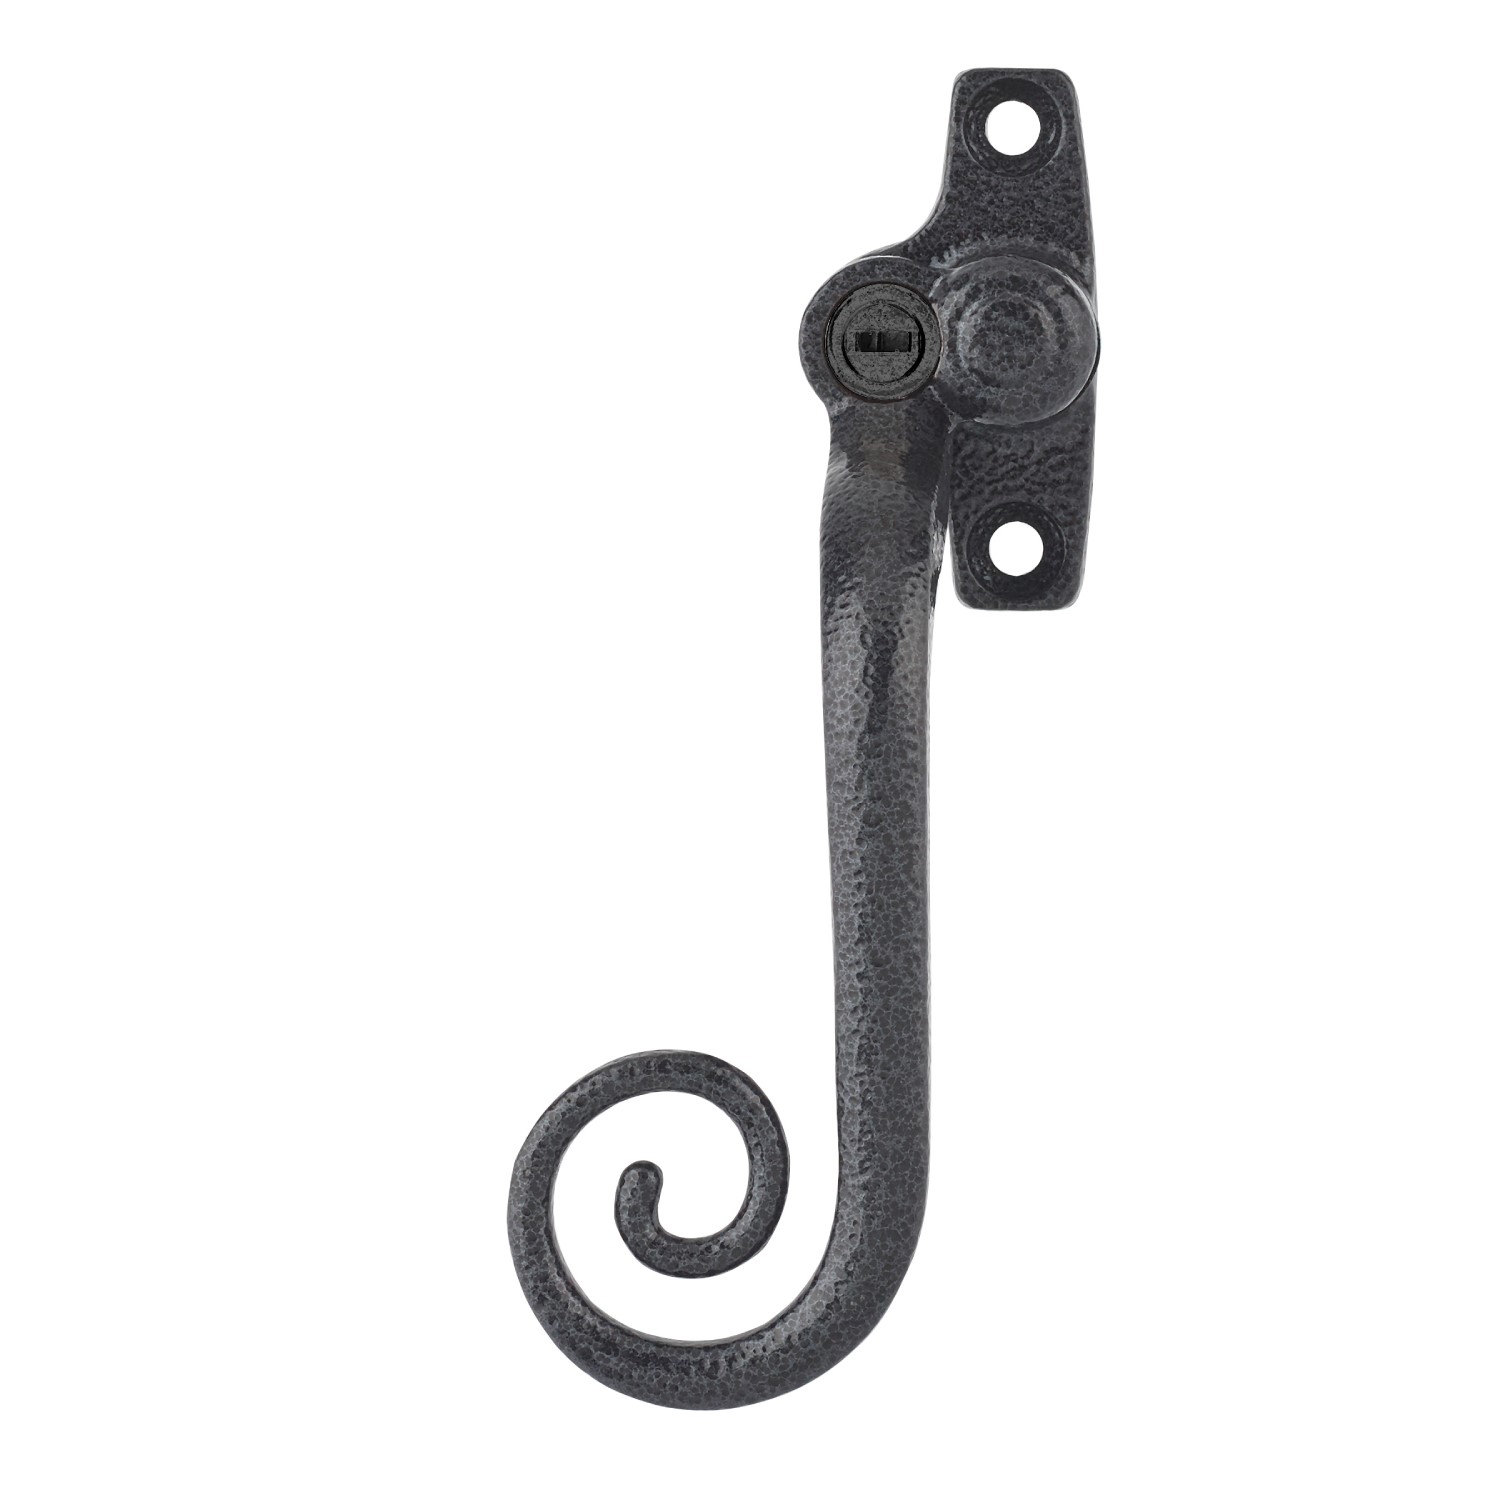 Monkey Tail Key Locking Window Handle Left Hand